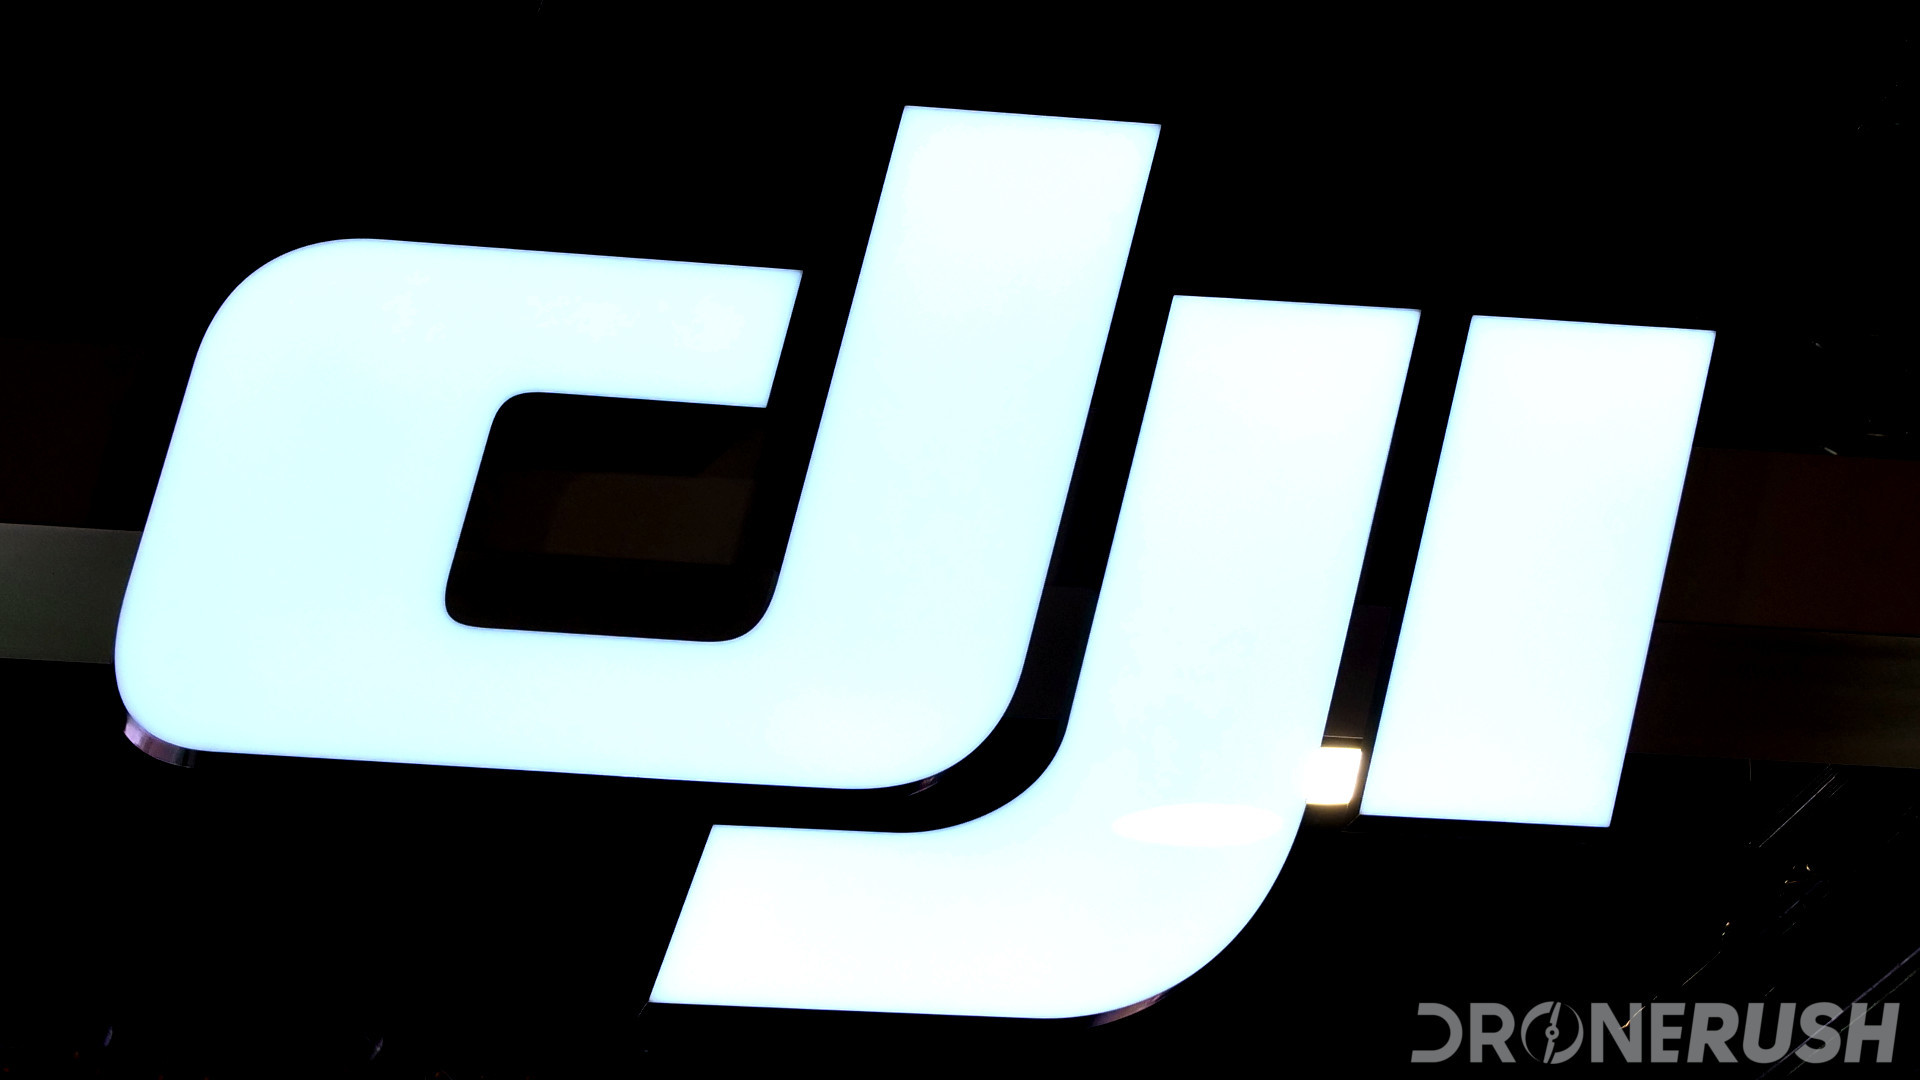 1920x1080 CES 2018 dr DJI booth logo